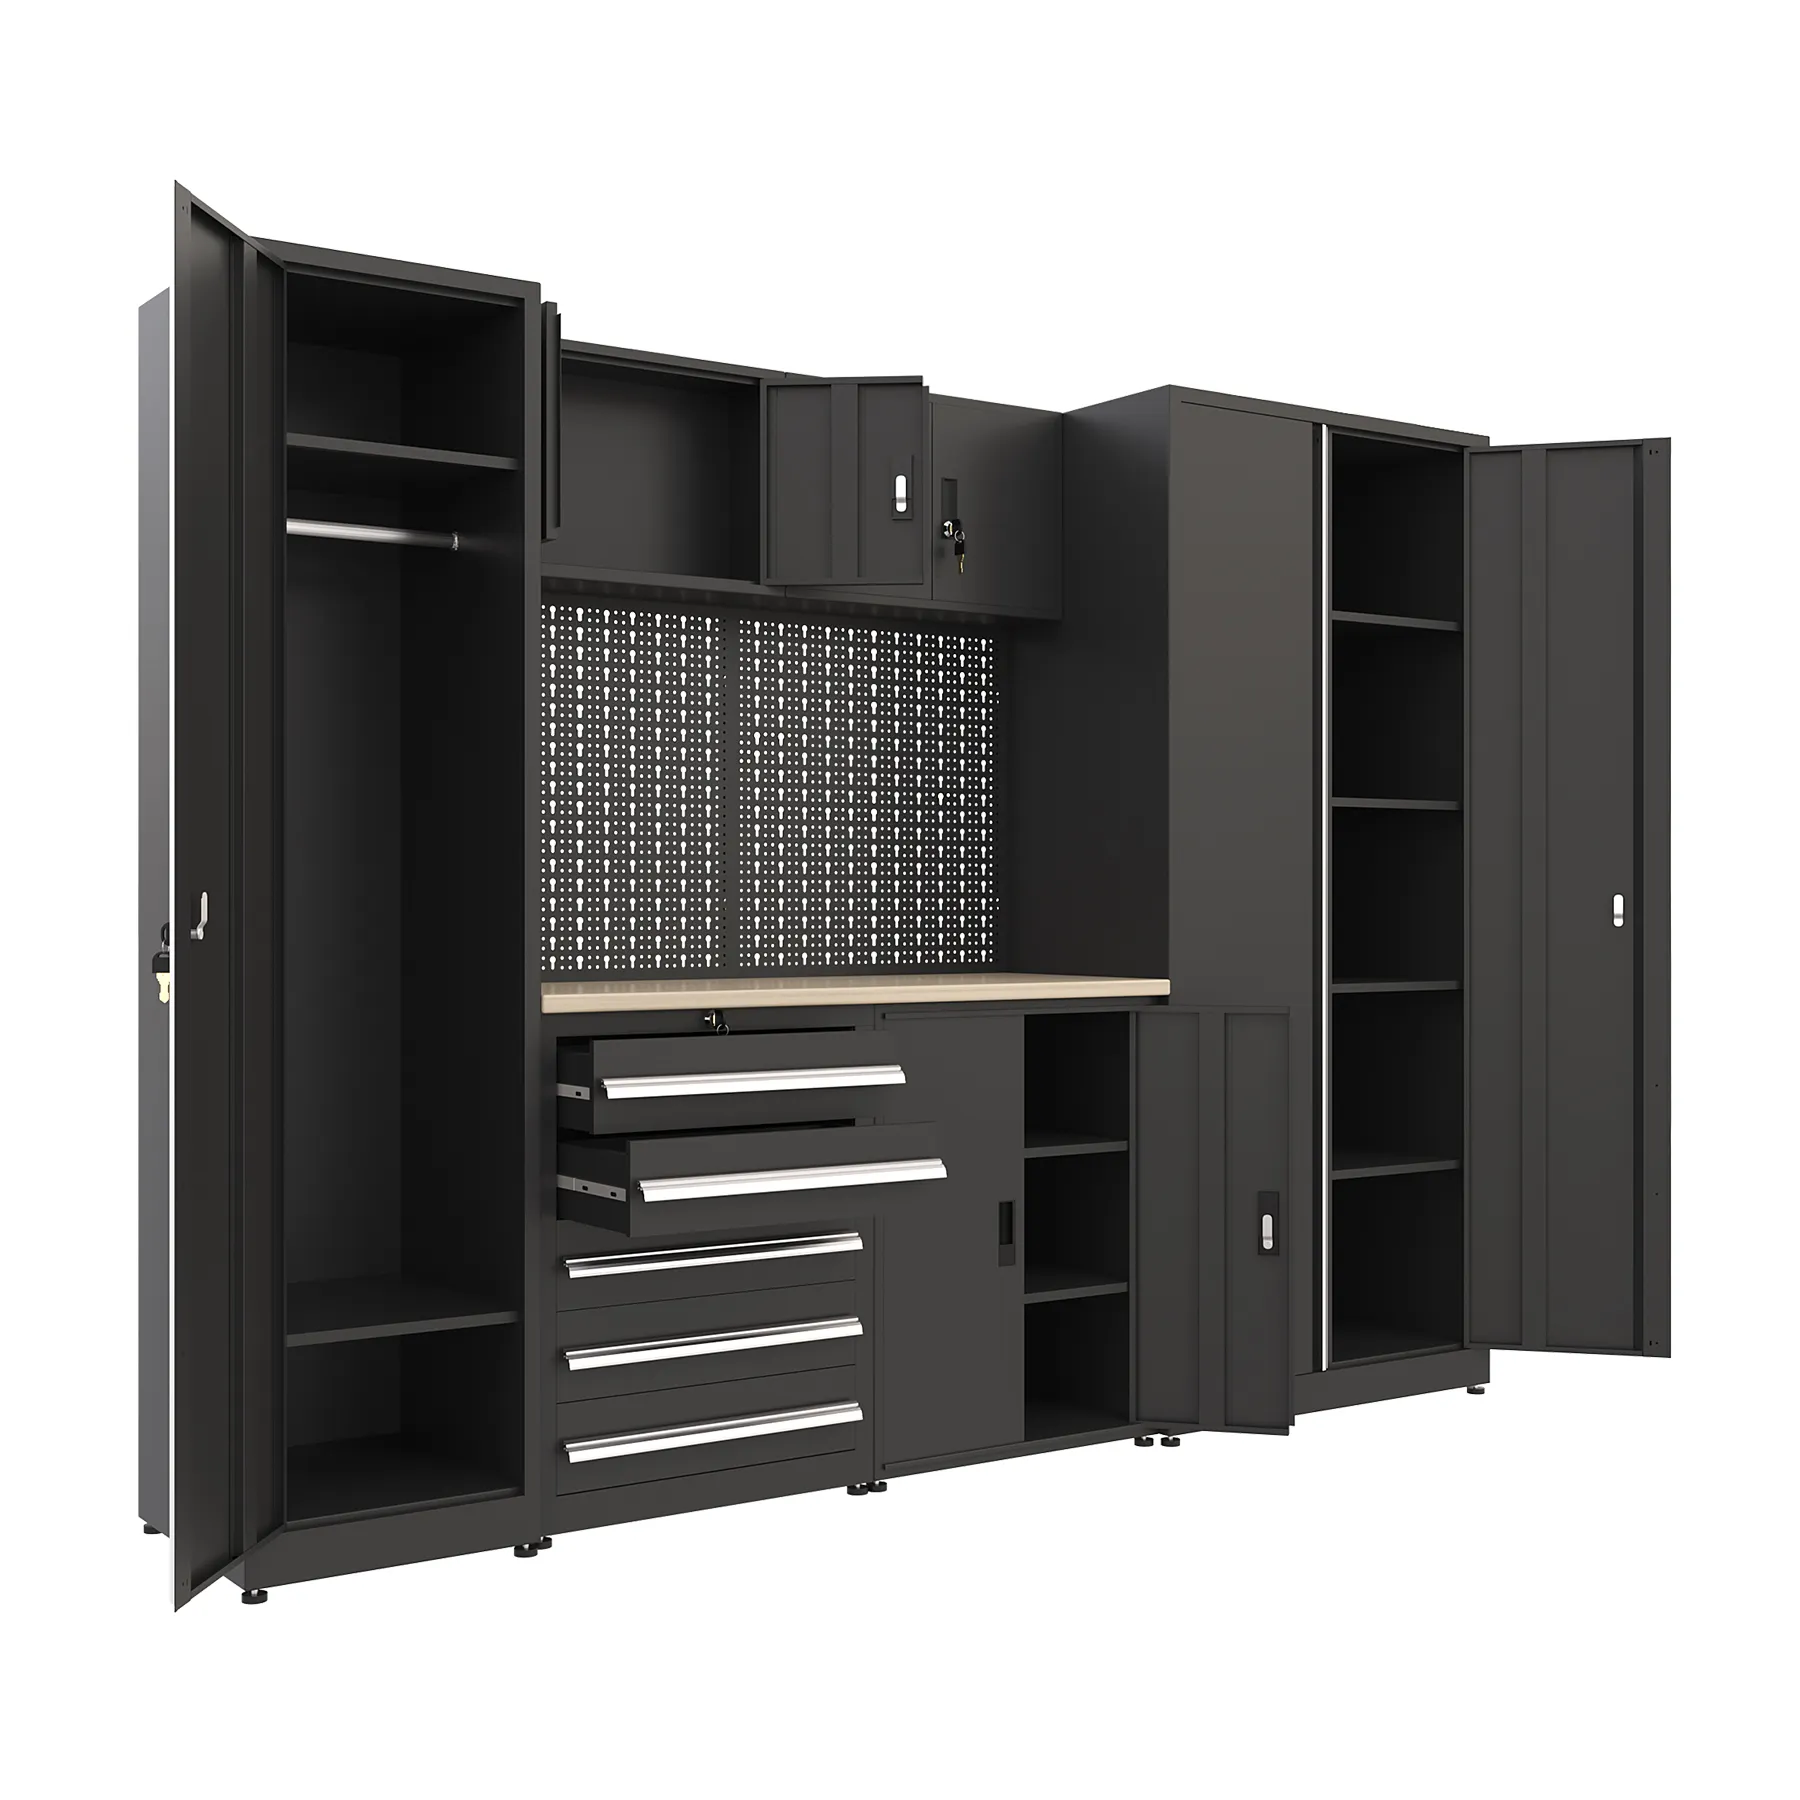 JZD Workshop Madular Set Workbench With Drawers 114 Inches Garage Cabinet Wooden Steel Storage Cabinet